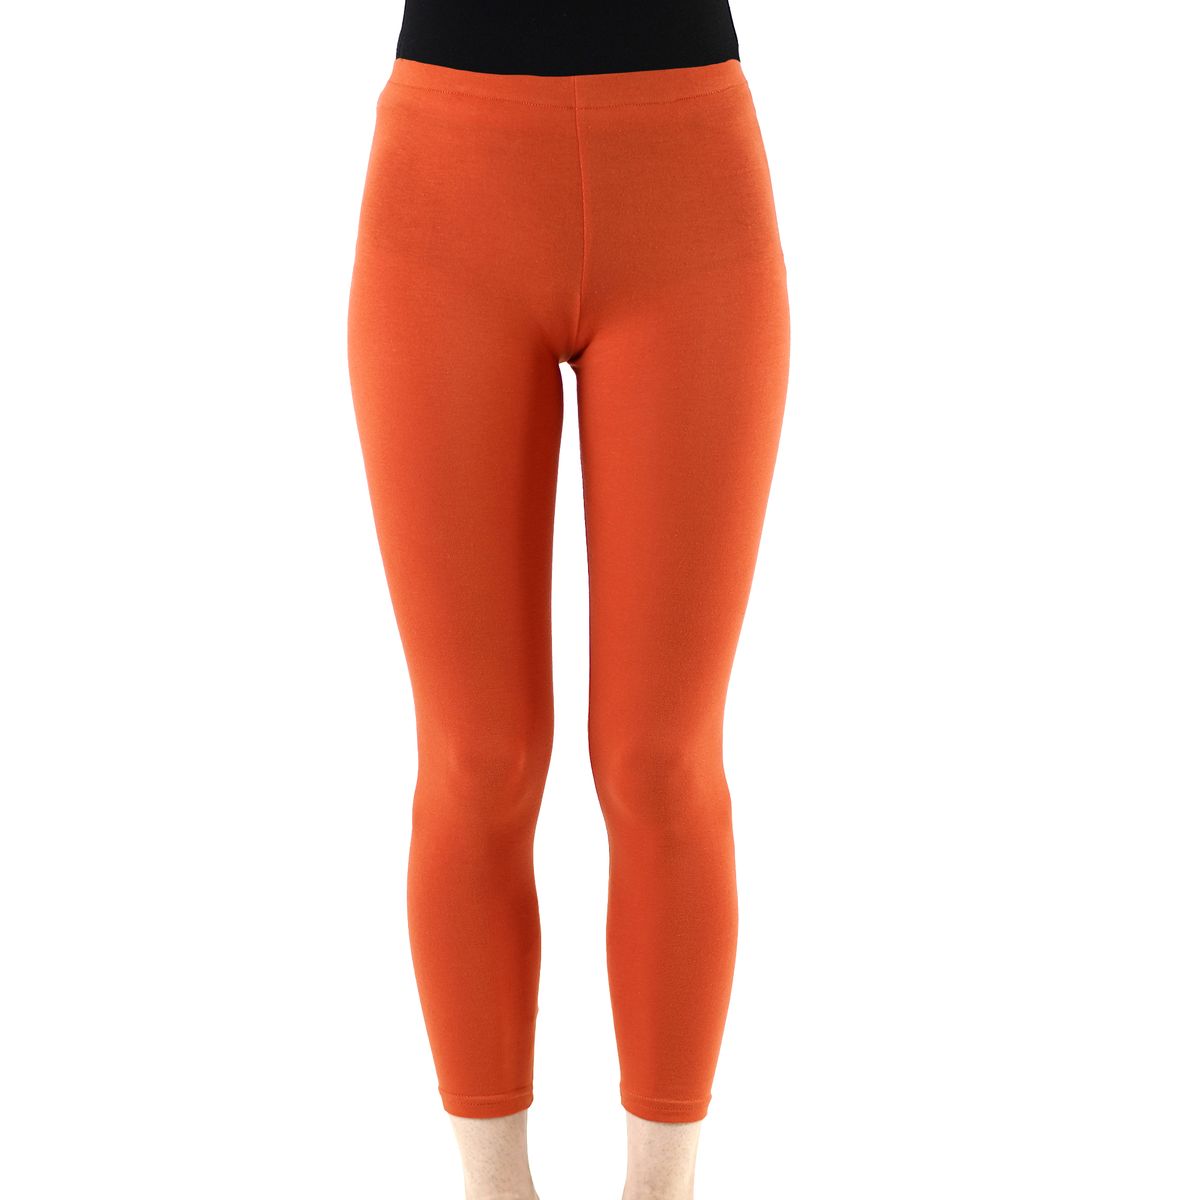 Unbranded Long Leggings Flare Orange, Shop Today. Get it Tomorrow!